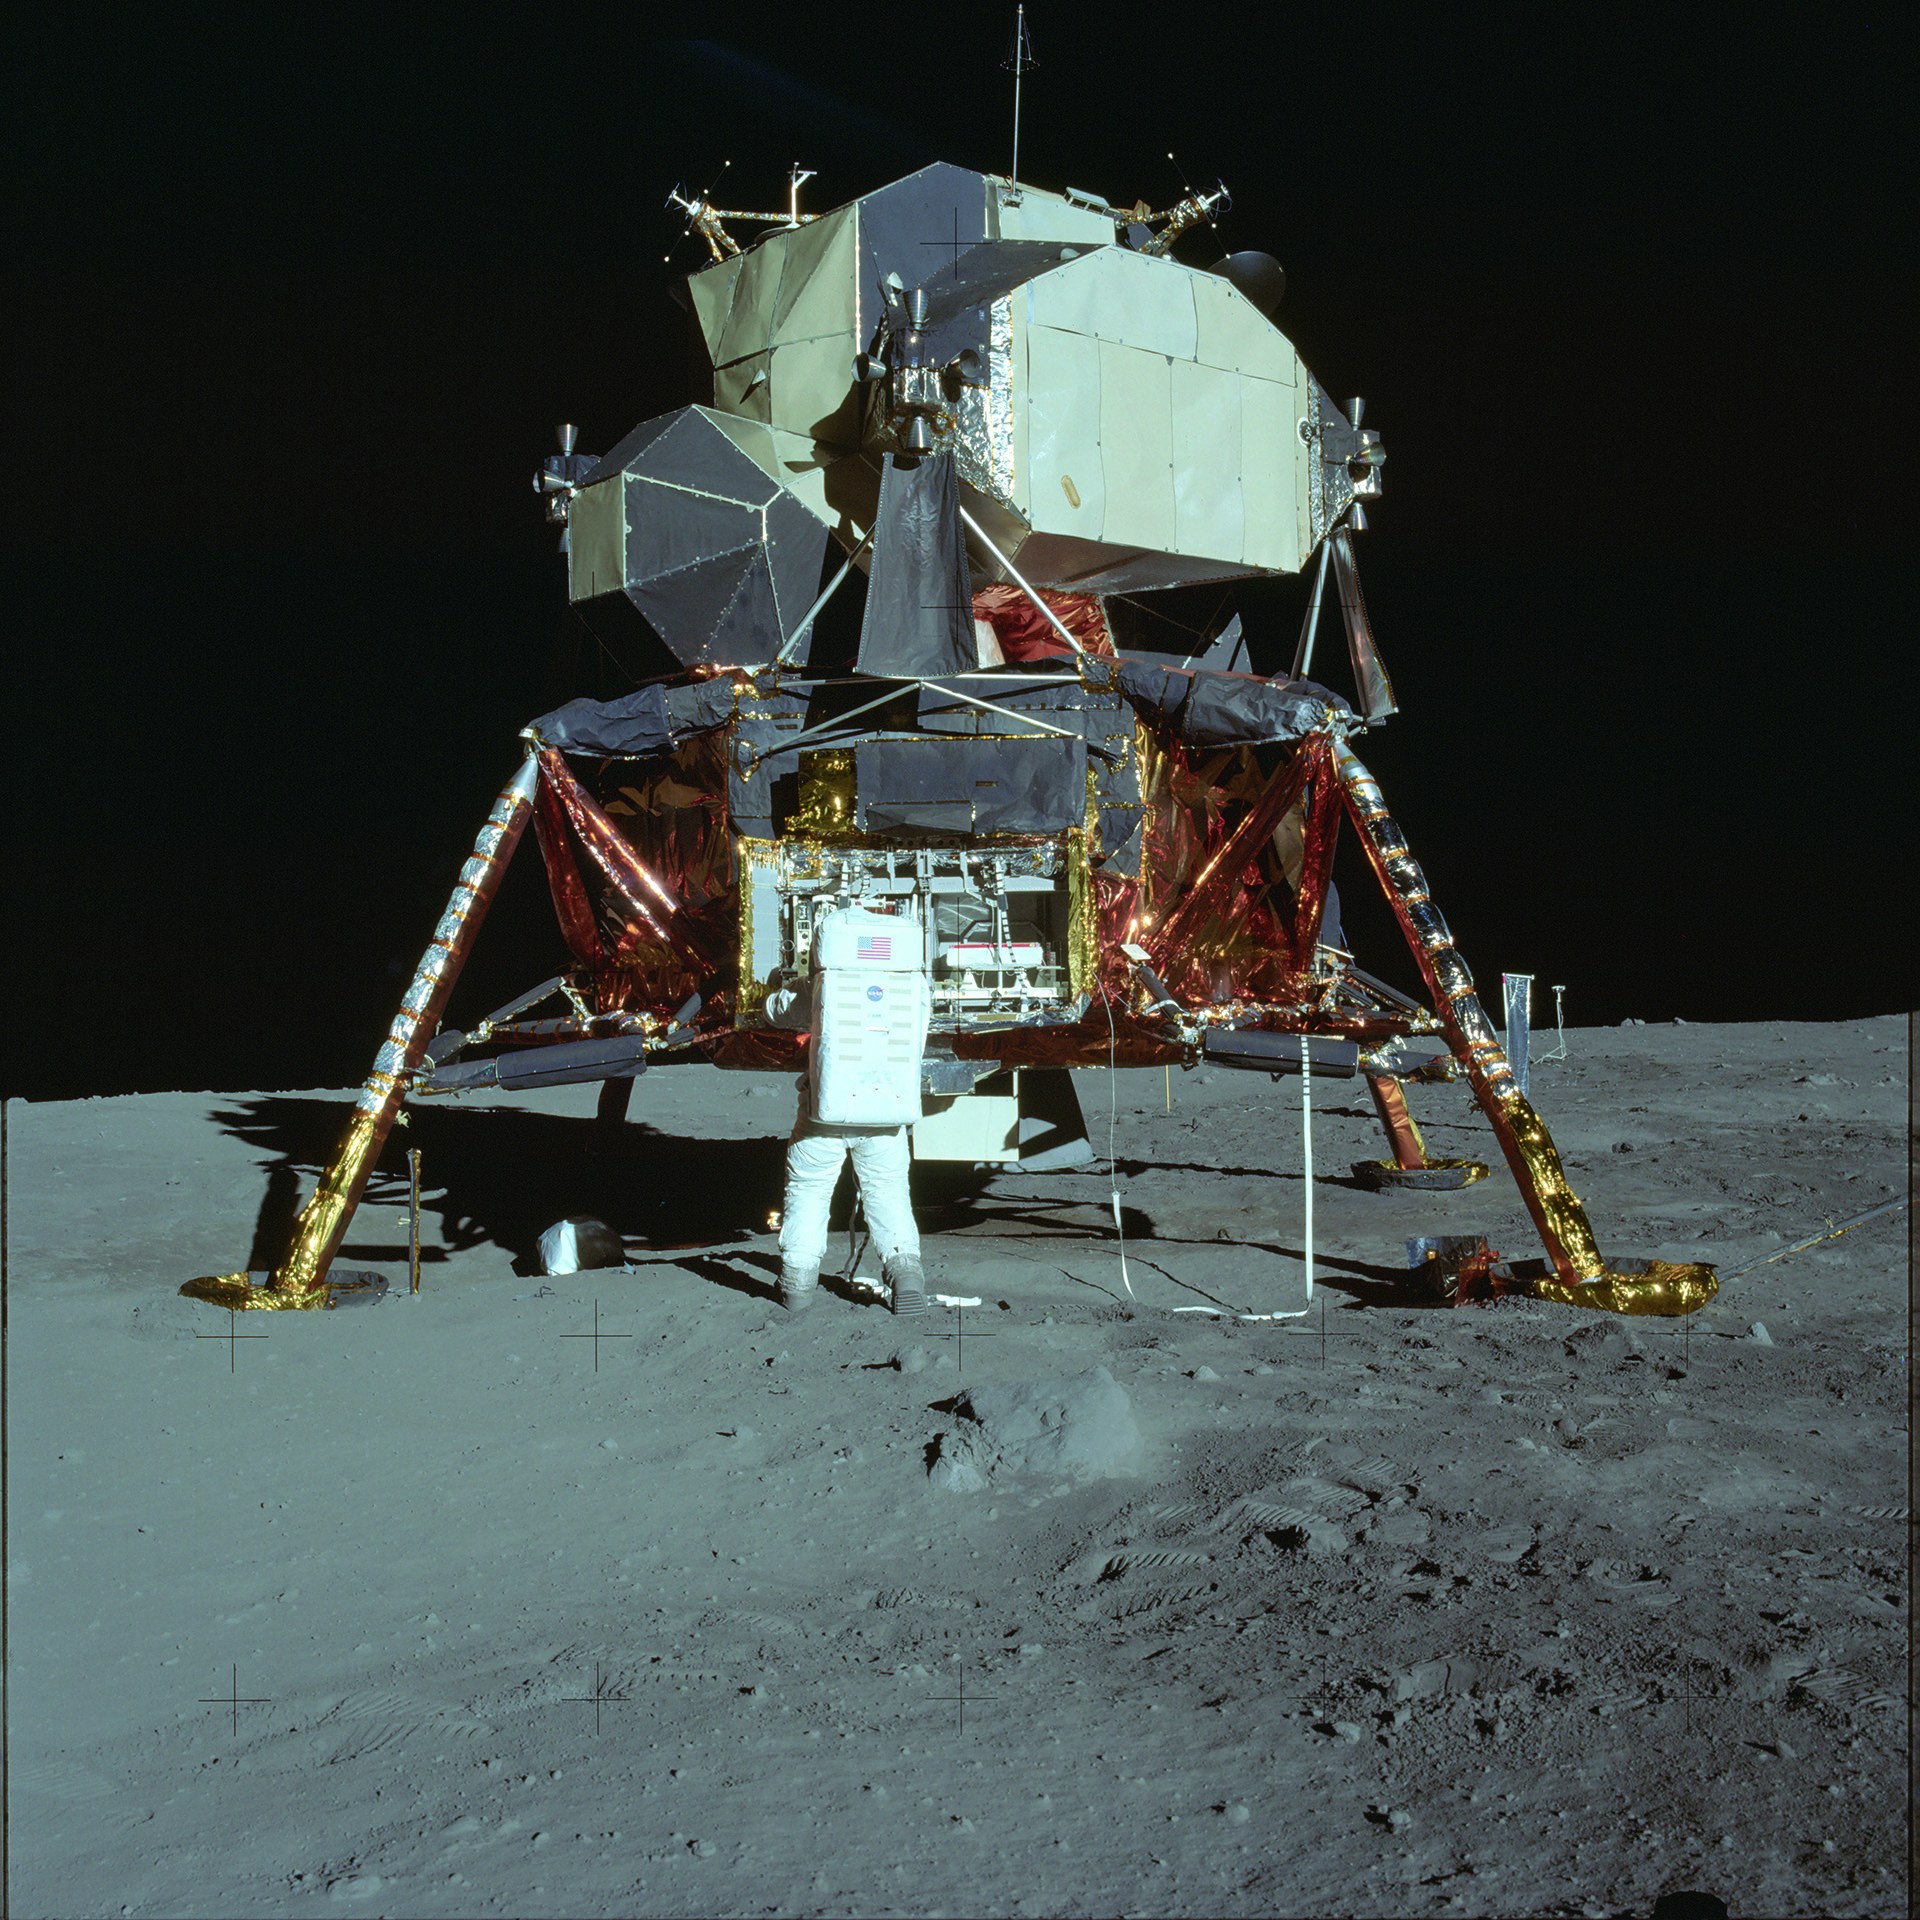 Apollo 11: The Eagle lunar module on the moon